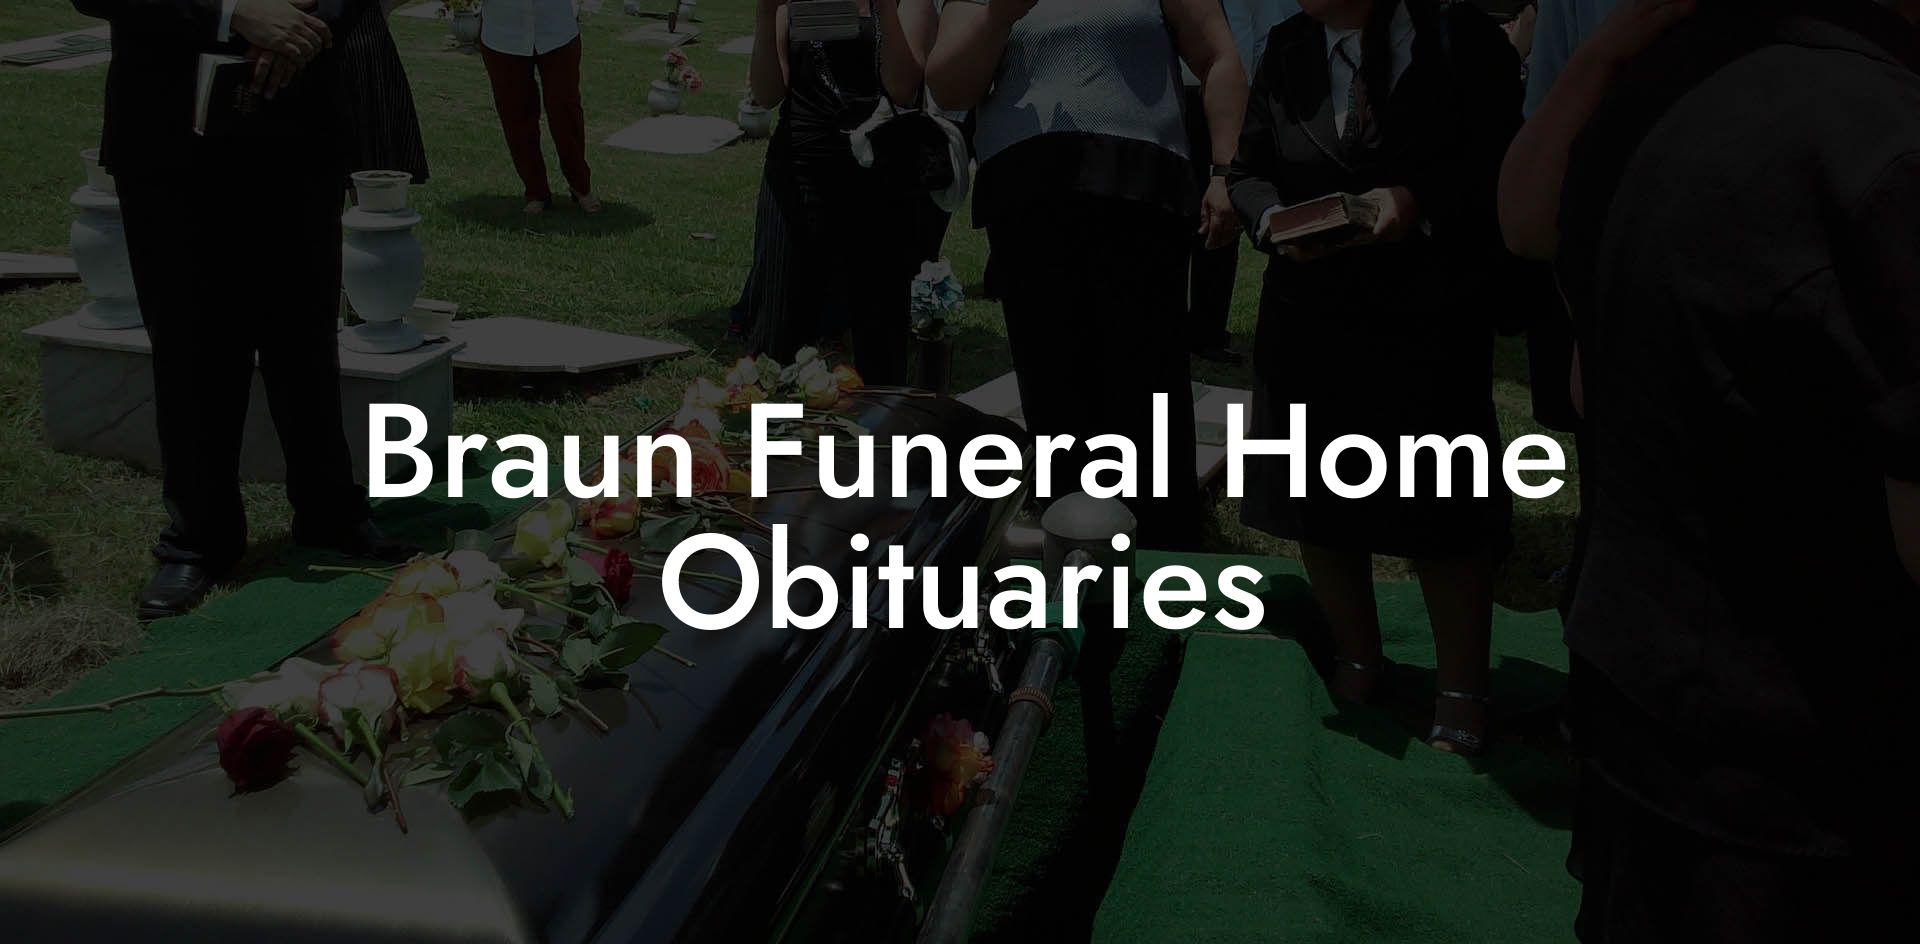 Braun Funeral Home Obituaries